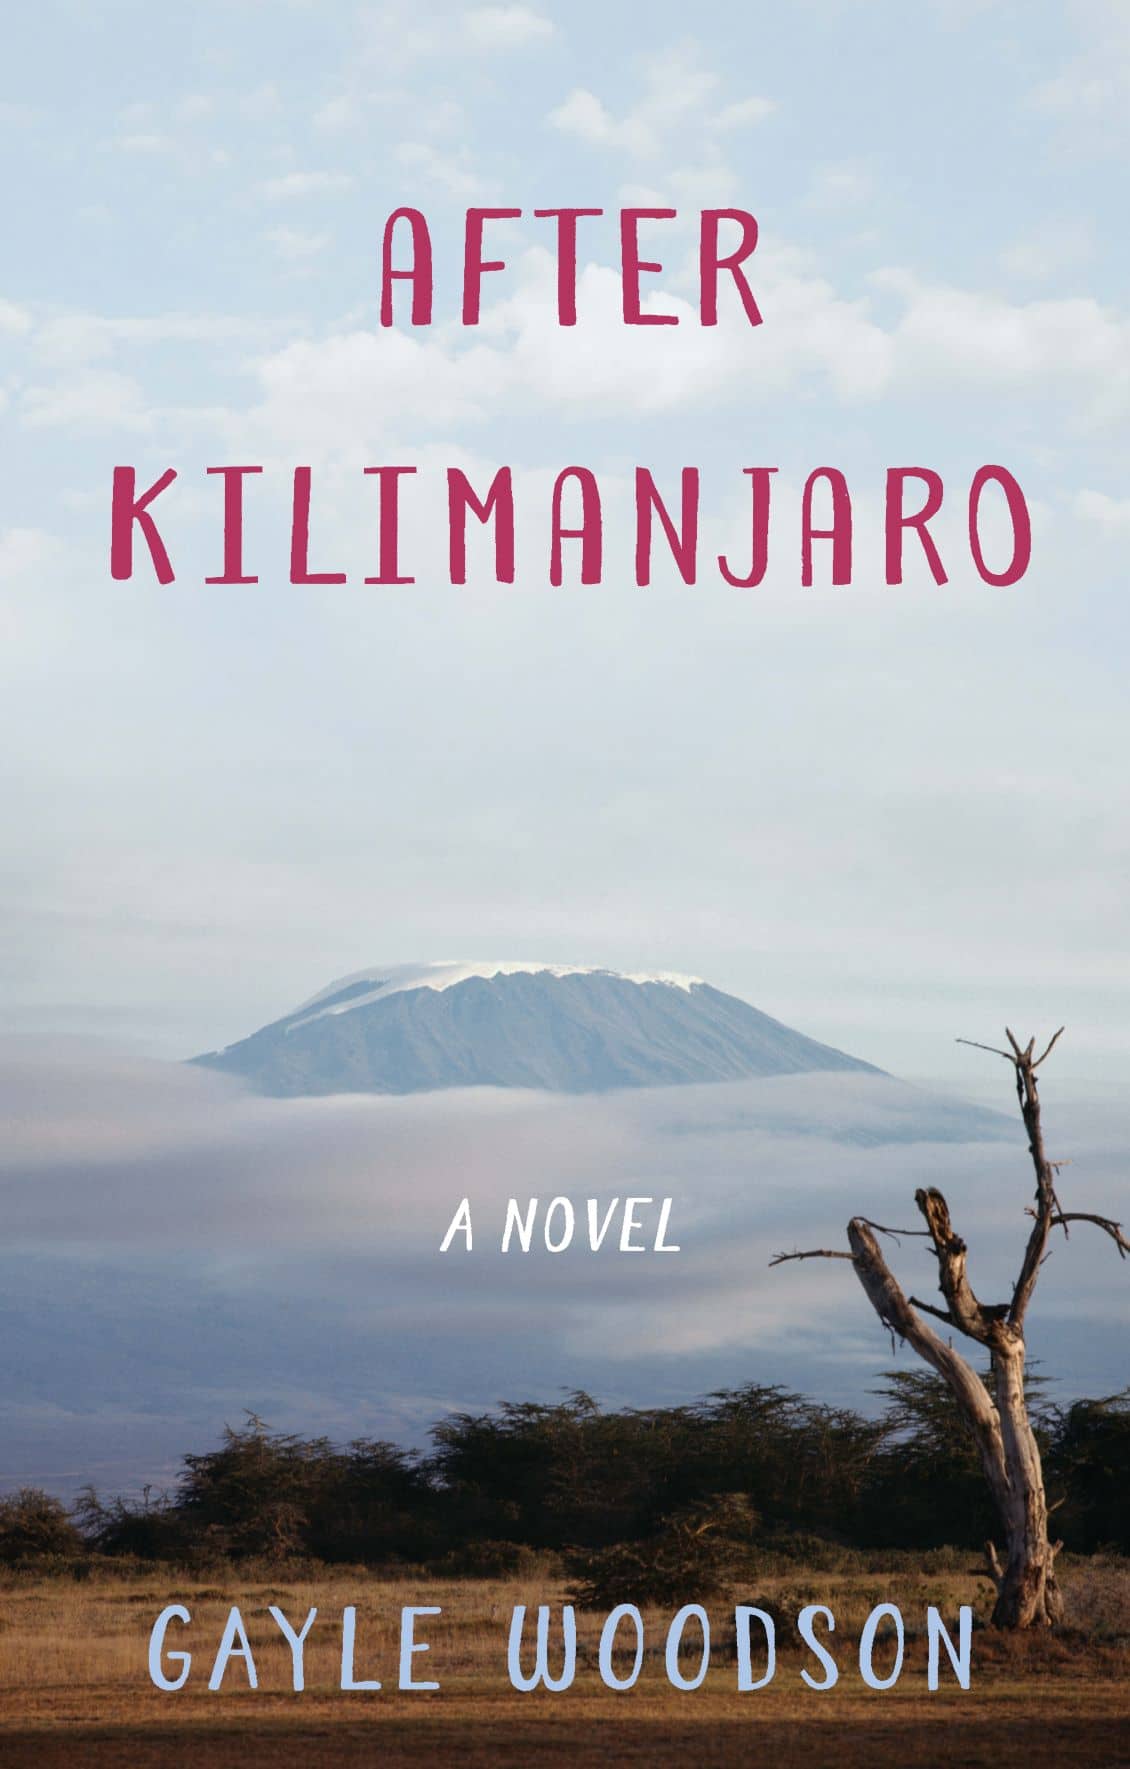 After Kilimanjaro